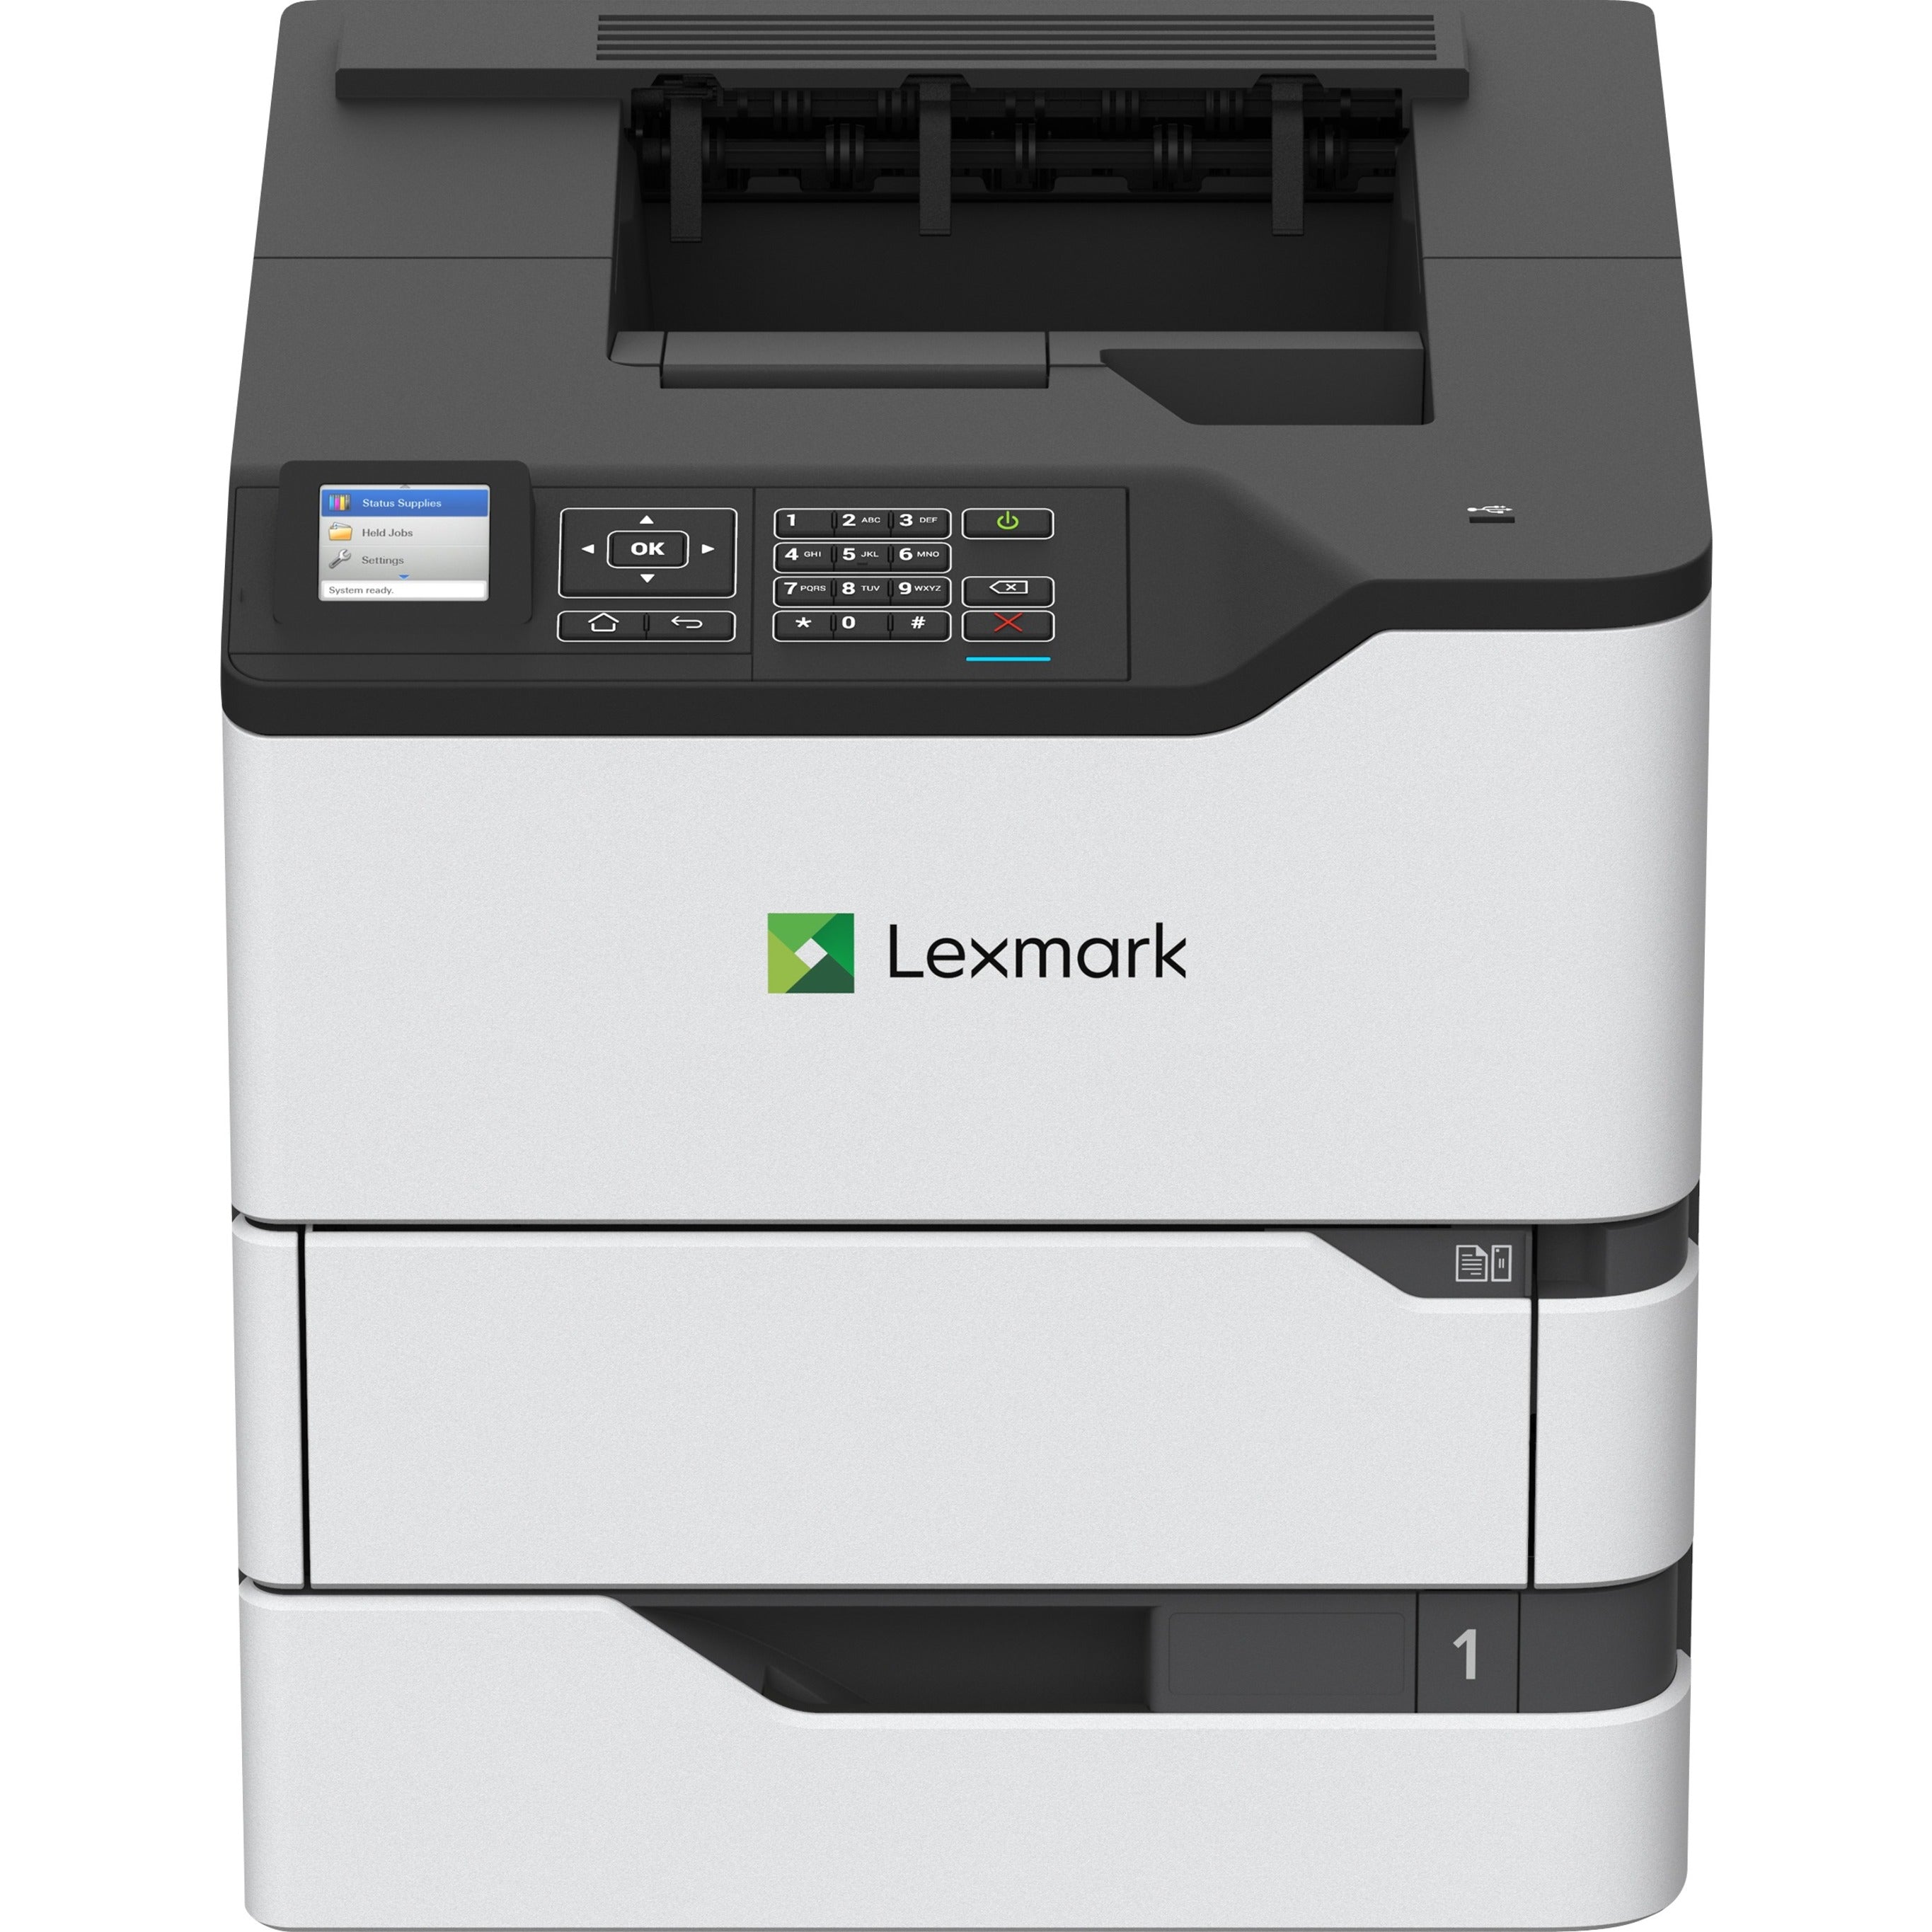 Lexmark 50G0610 MS725dvn Laser Printer, Monochrome, Automatic Duplex Printing, 55 ppm, 1200 x 1200 dpi